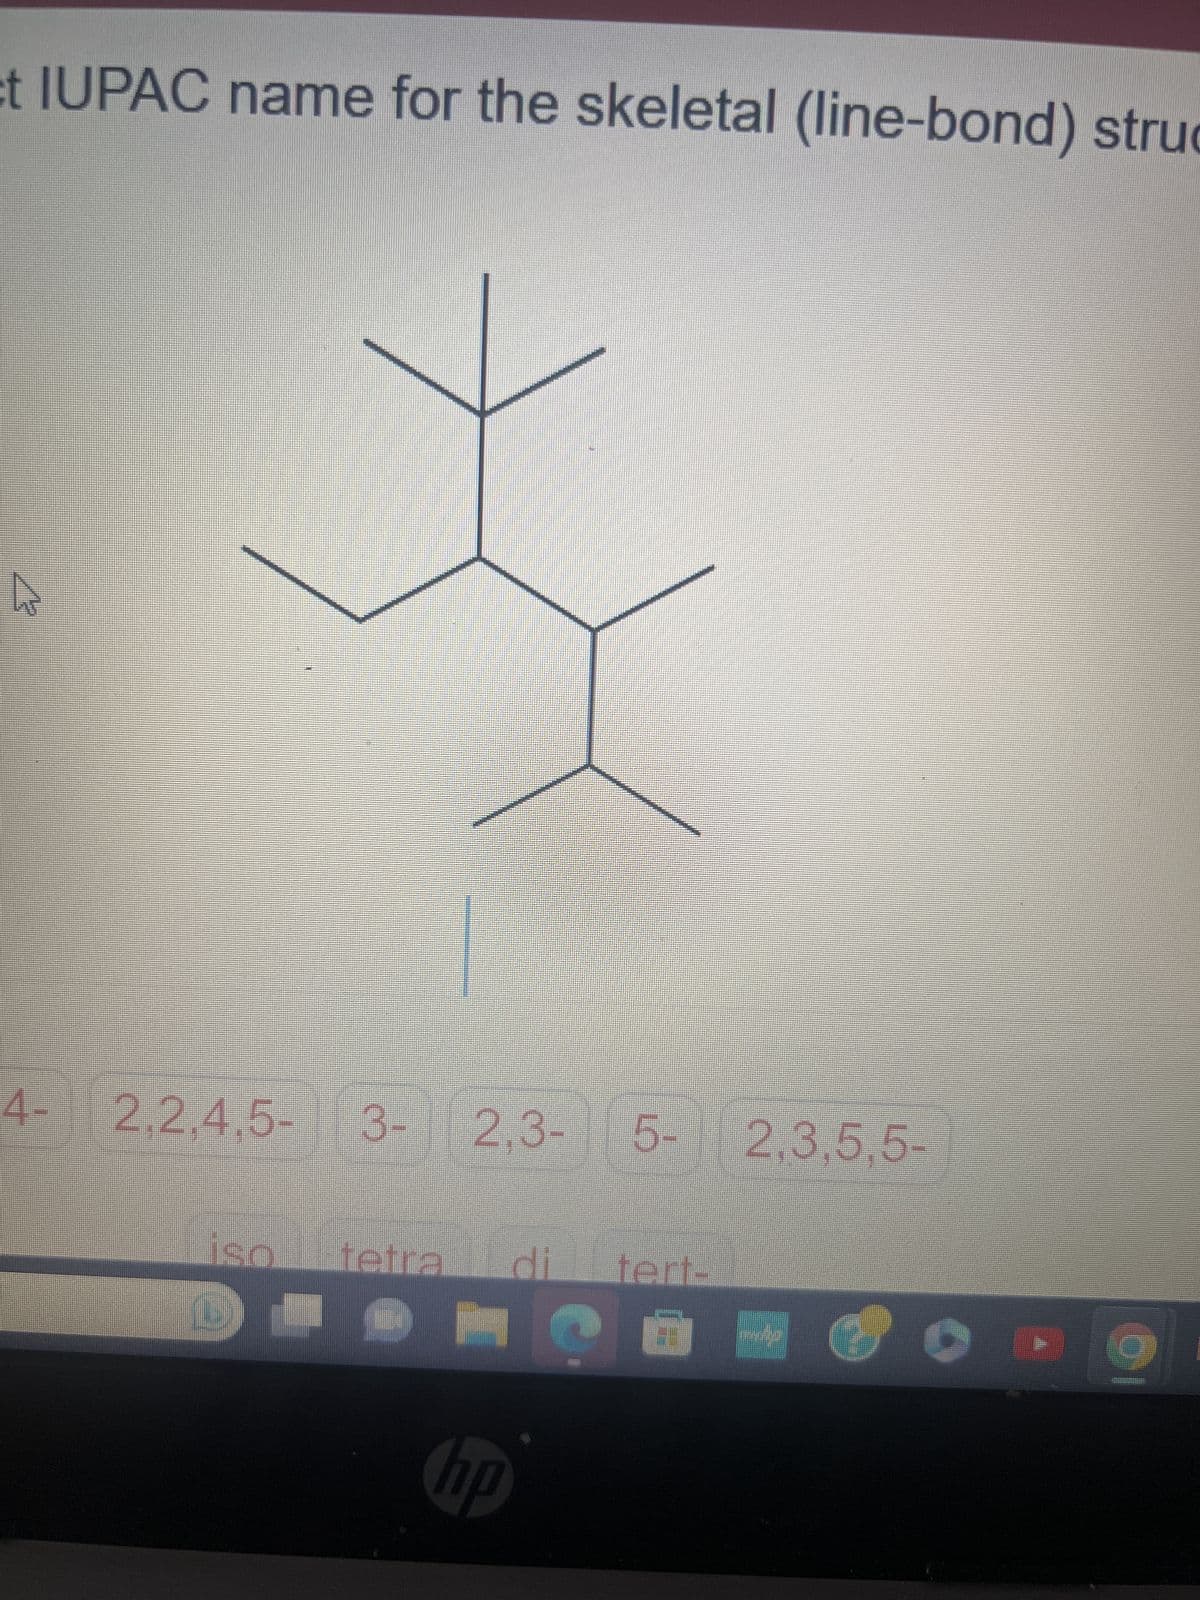 et IUPAC name for the skeletal (line-bond) struc
4- 2,2,4,5- 3- 2.3
iso tetra
H
hp
tert-
2,3,5,5-
6 -
C